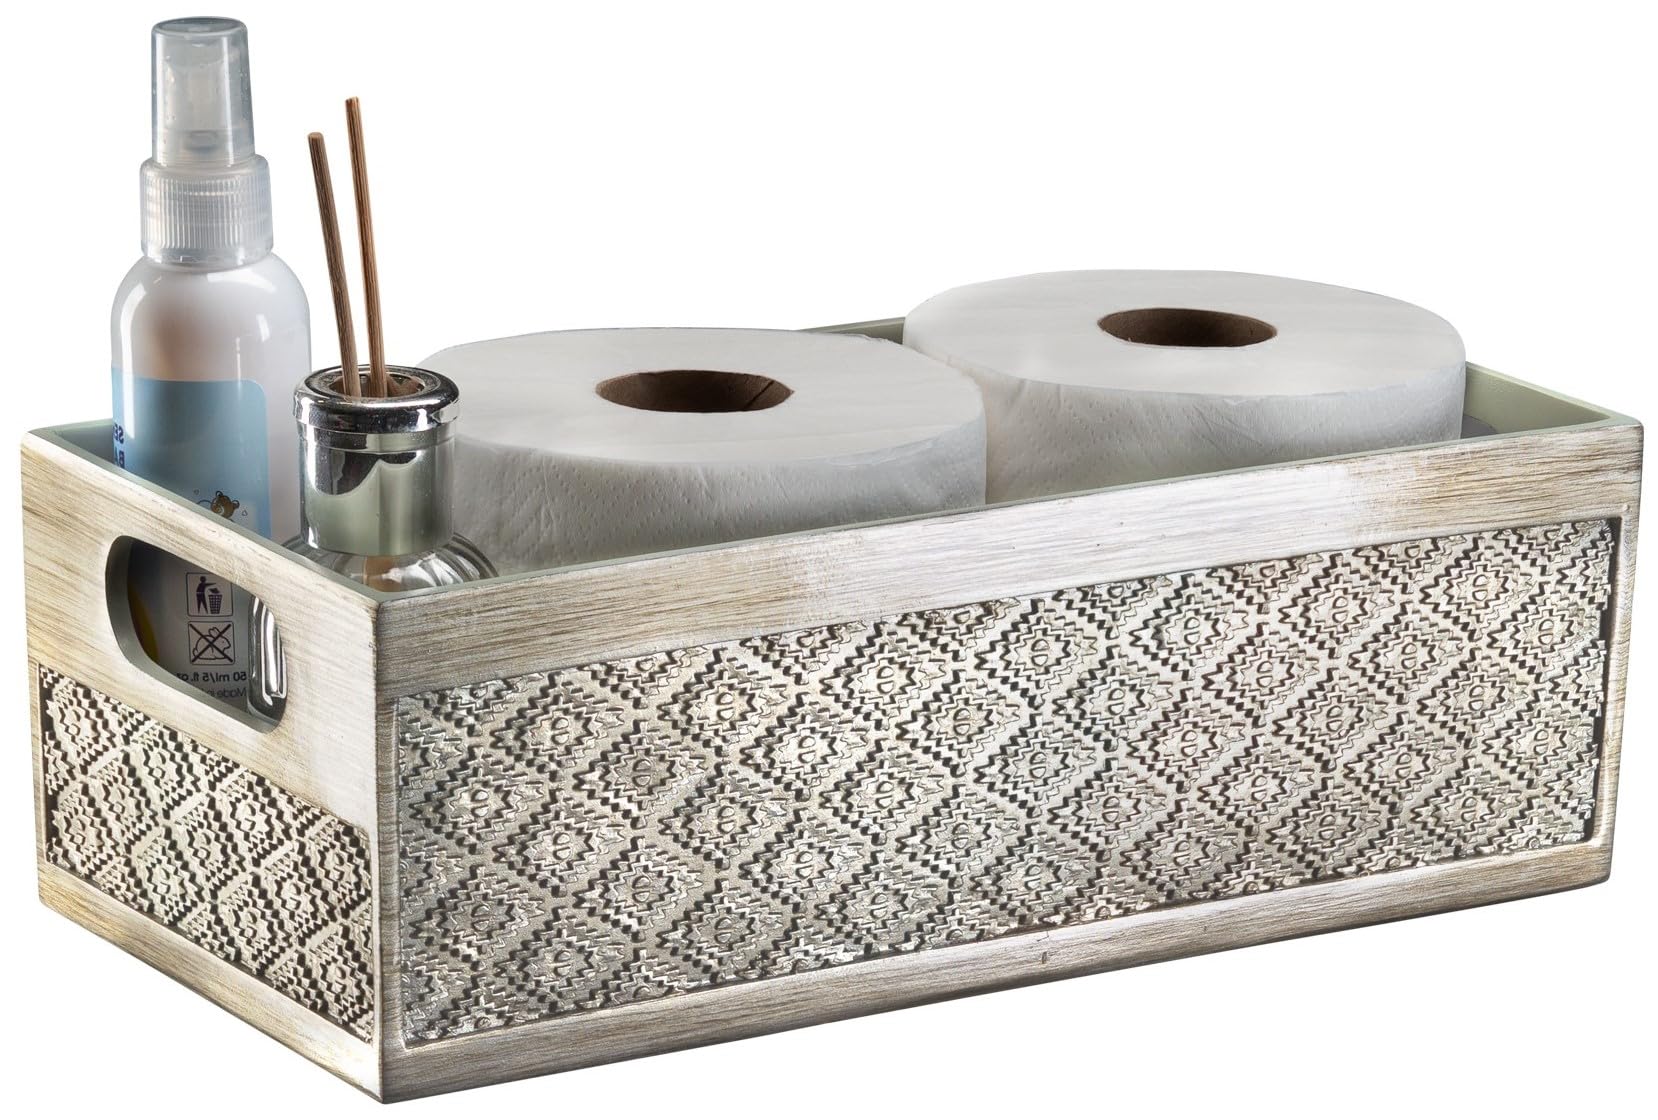 Bathroom Decor Box Toilet Paper Holder Storage Basket - Decorative Toilet Tank Topper Bathroom Storage Organizer - Bathroom Sink Organizer Countertop Container, Modern Silver-Gray Look (Dublin)  - Like New